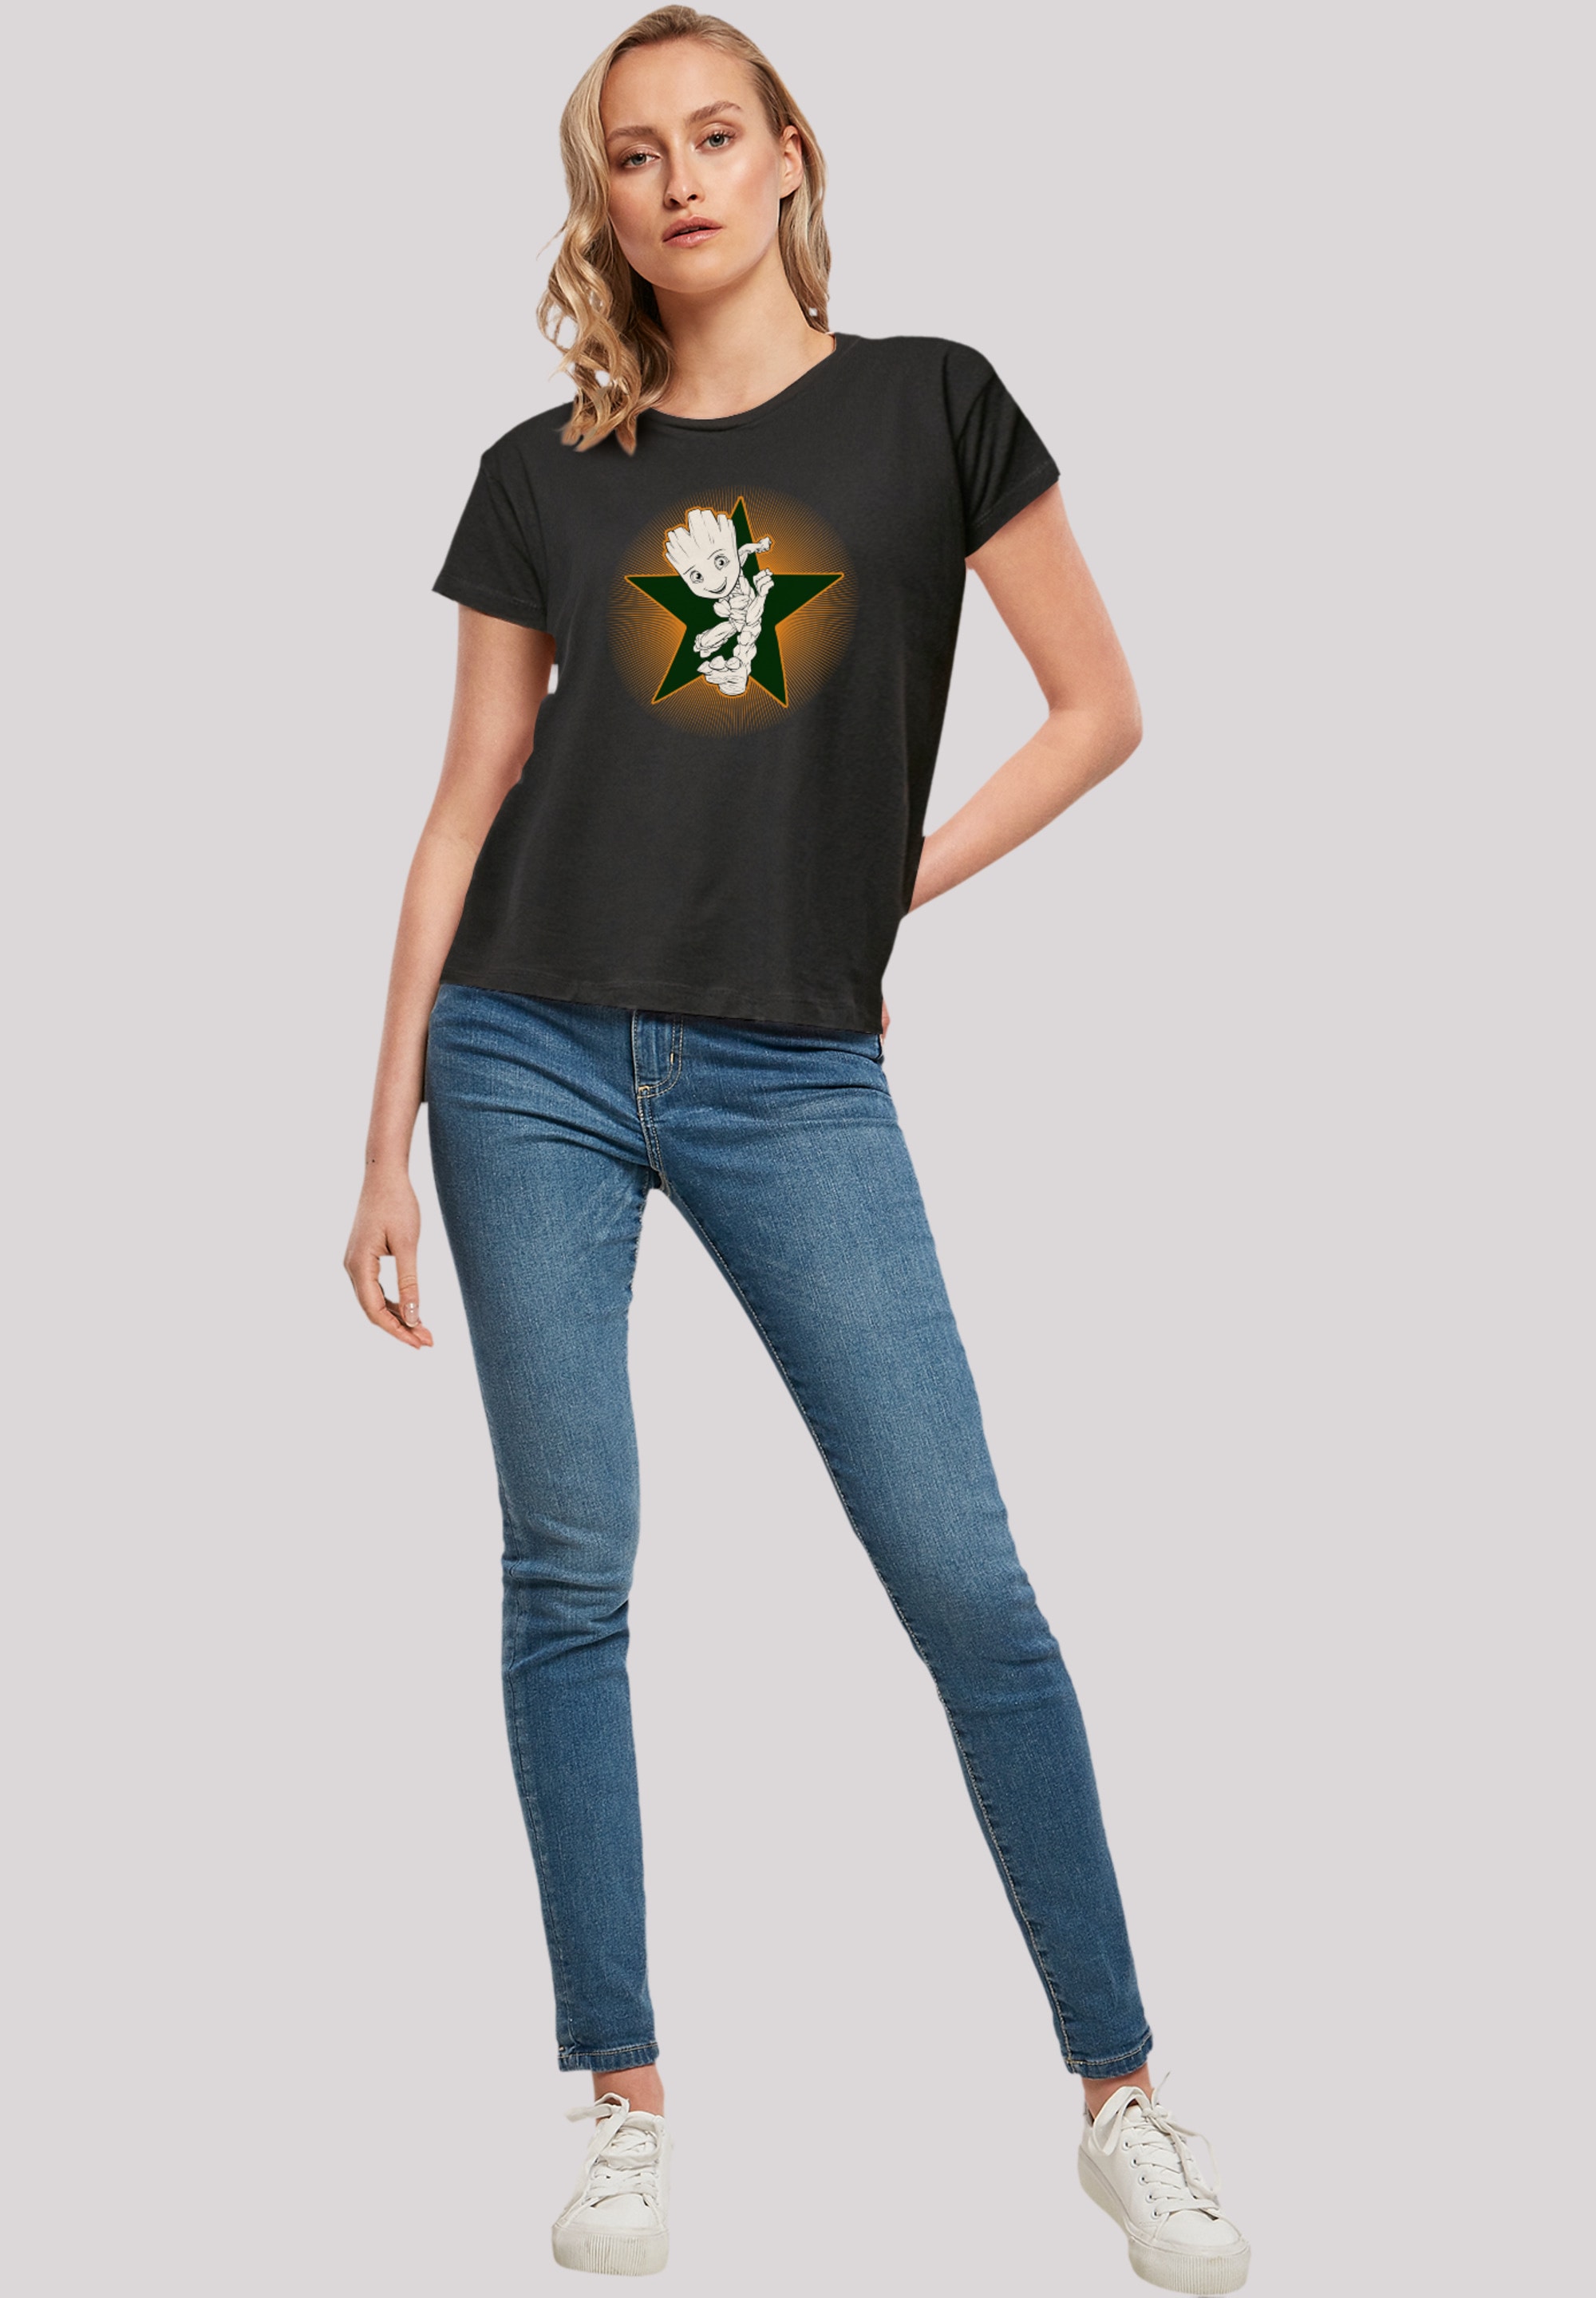 Guardians Qualität T-Shirt F4NT4STIC The | Galaxy »Marvel Premium Of online Star«, Groot BAUR kaufen